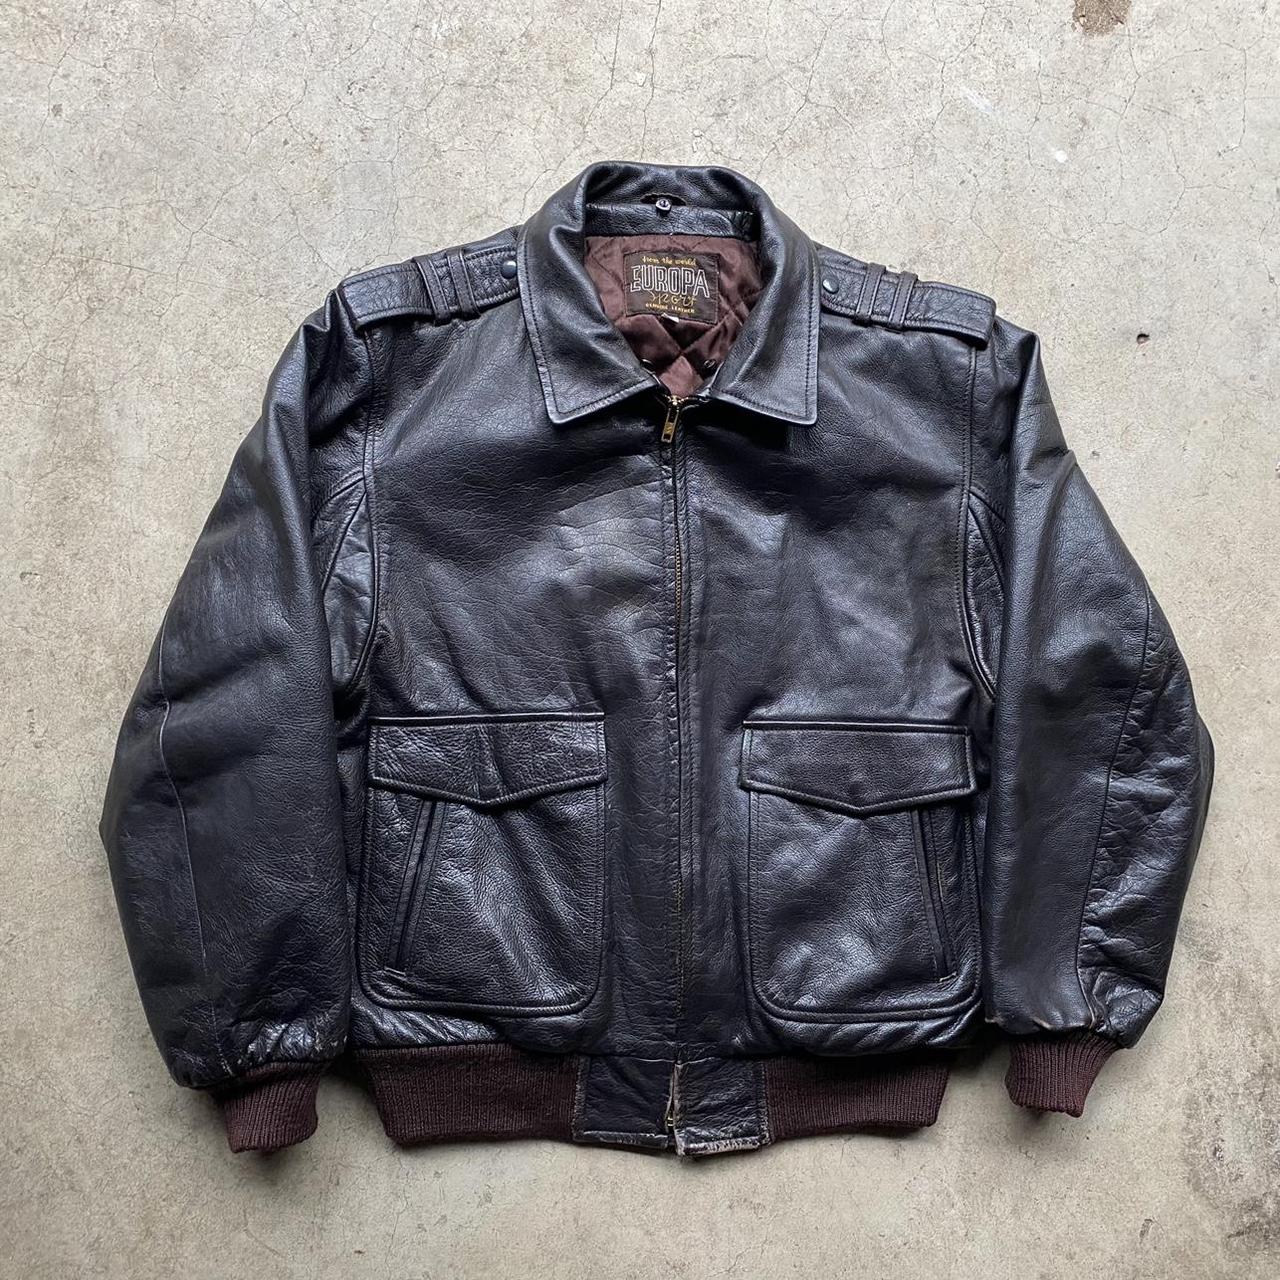 Leather g1 flight jacket style 80s bomber Size 42... - Depop